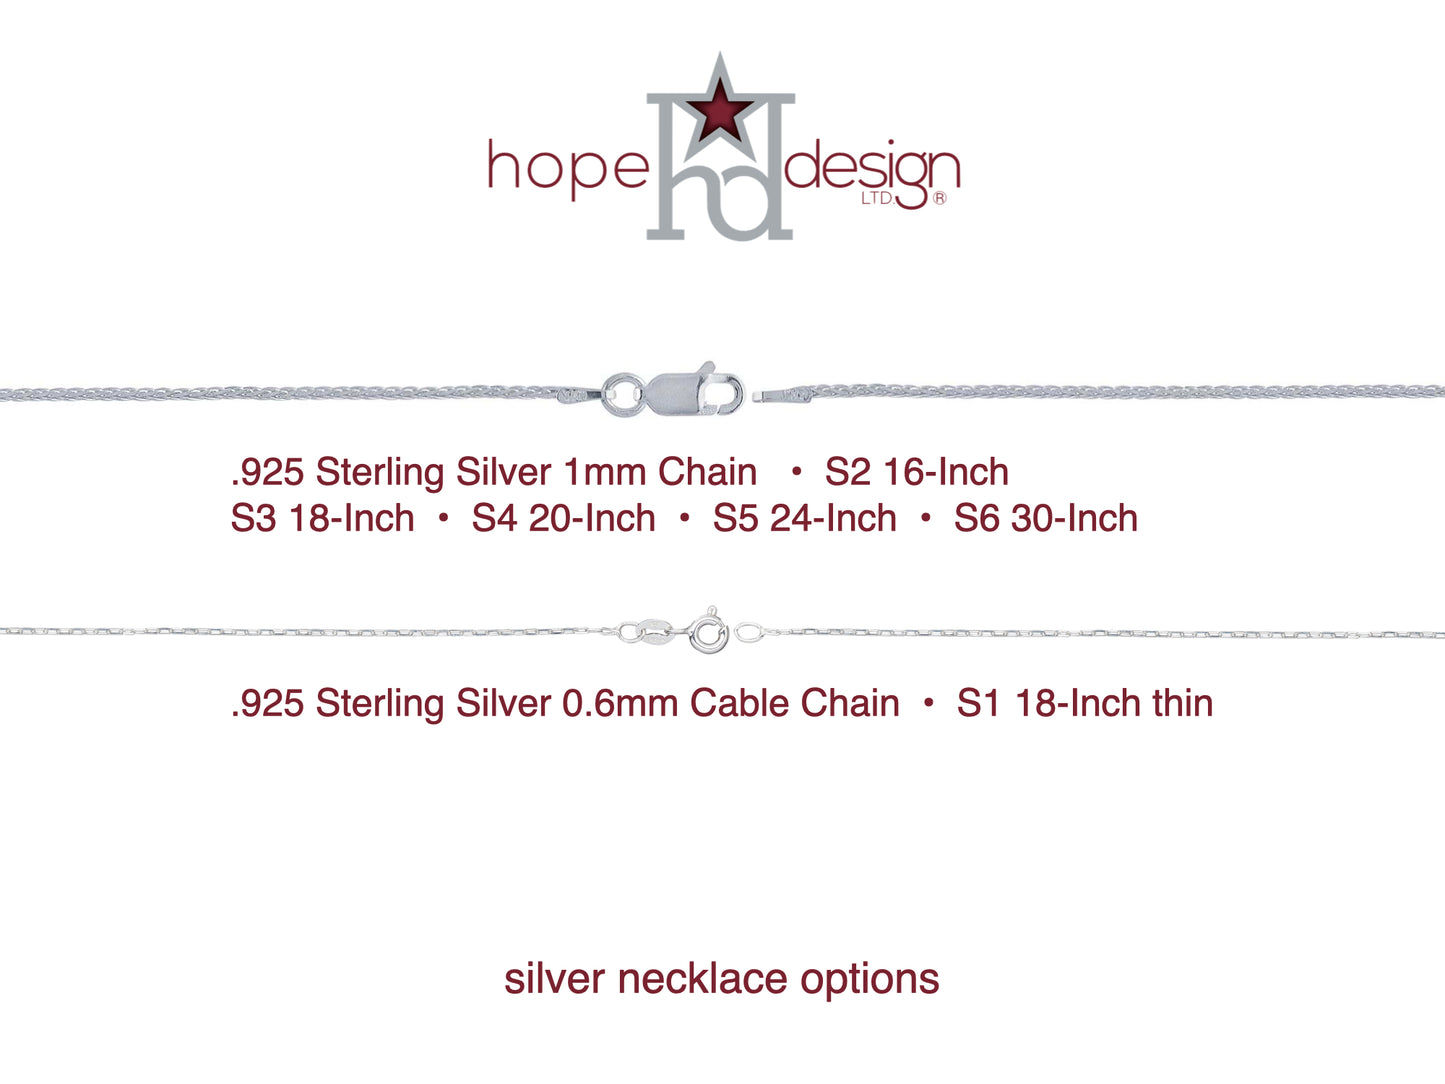 Marine Corps Button Necklace - Large Silver Rhinestone Pendant